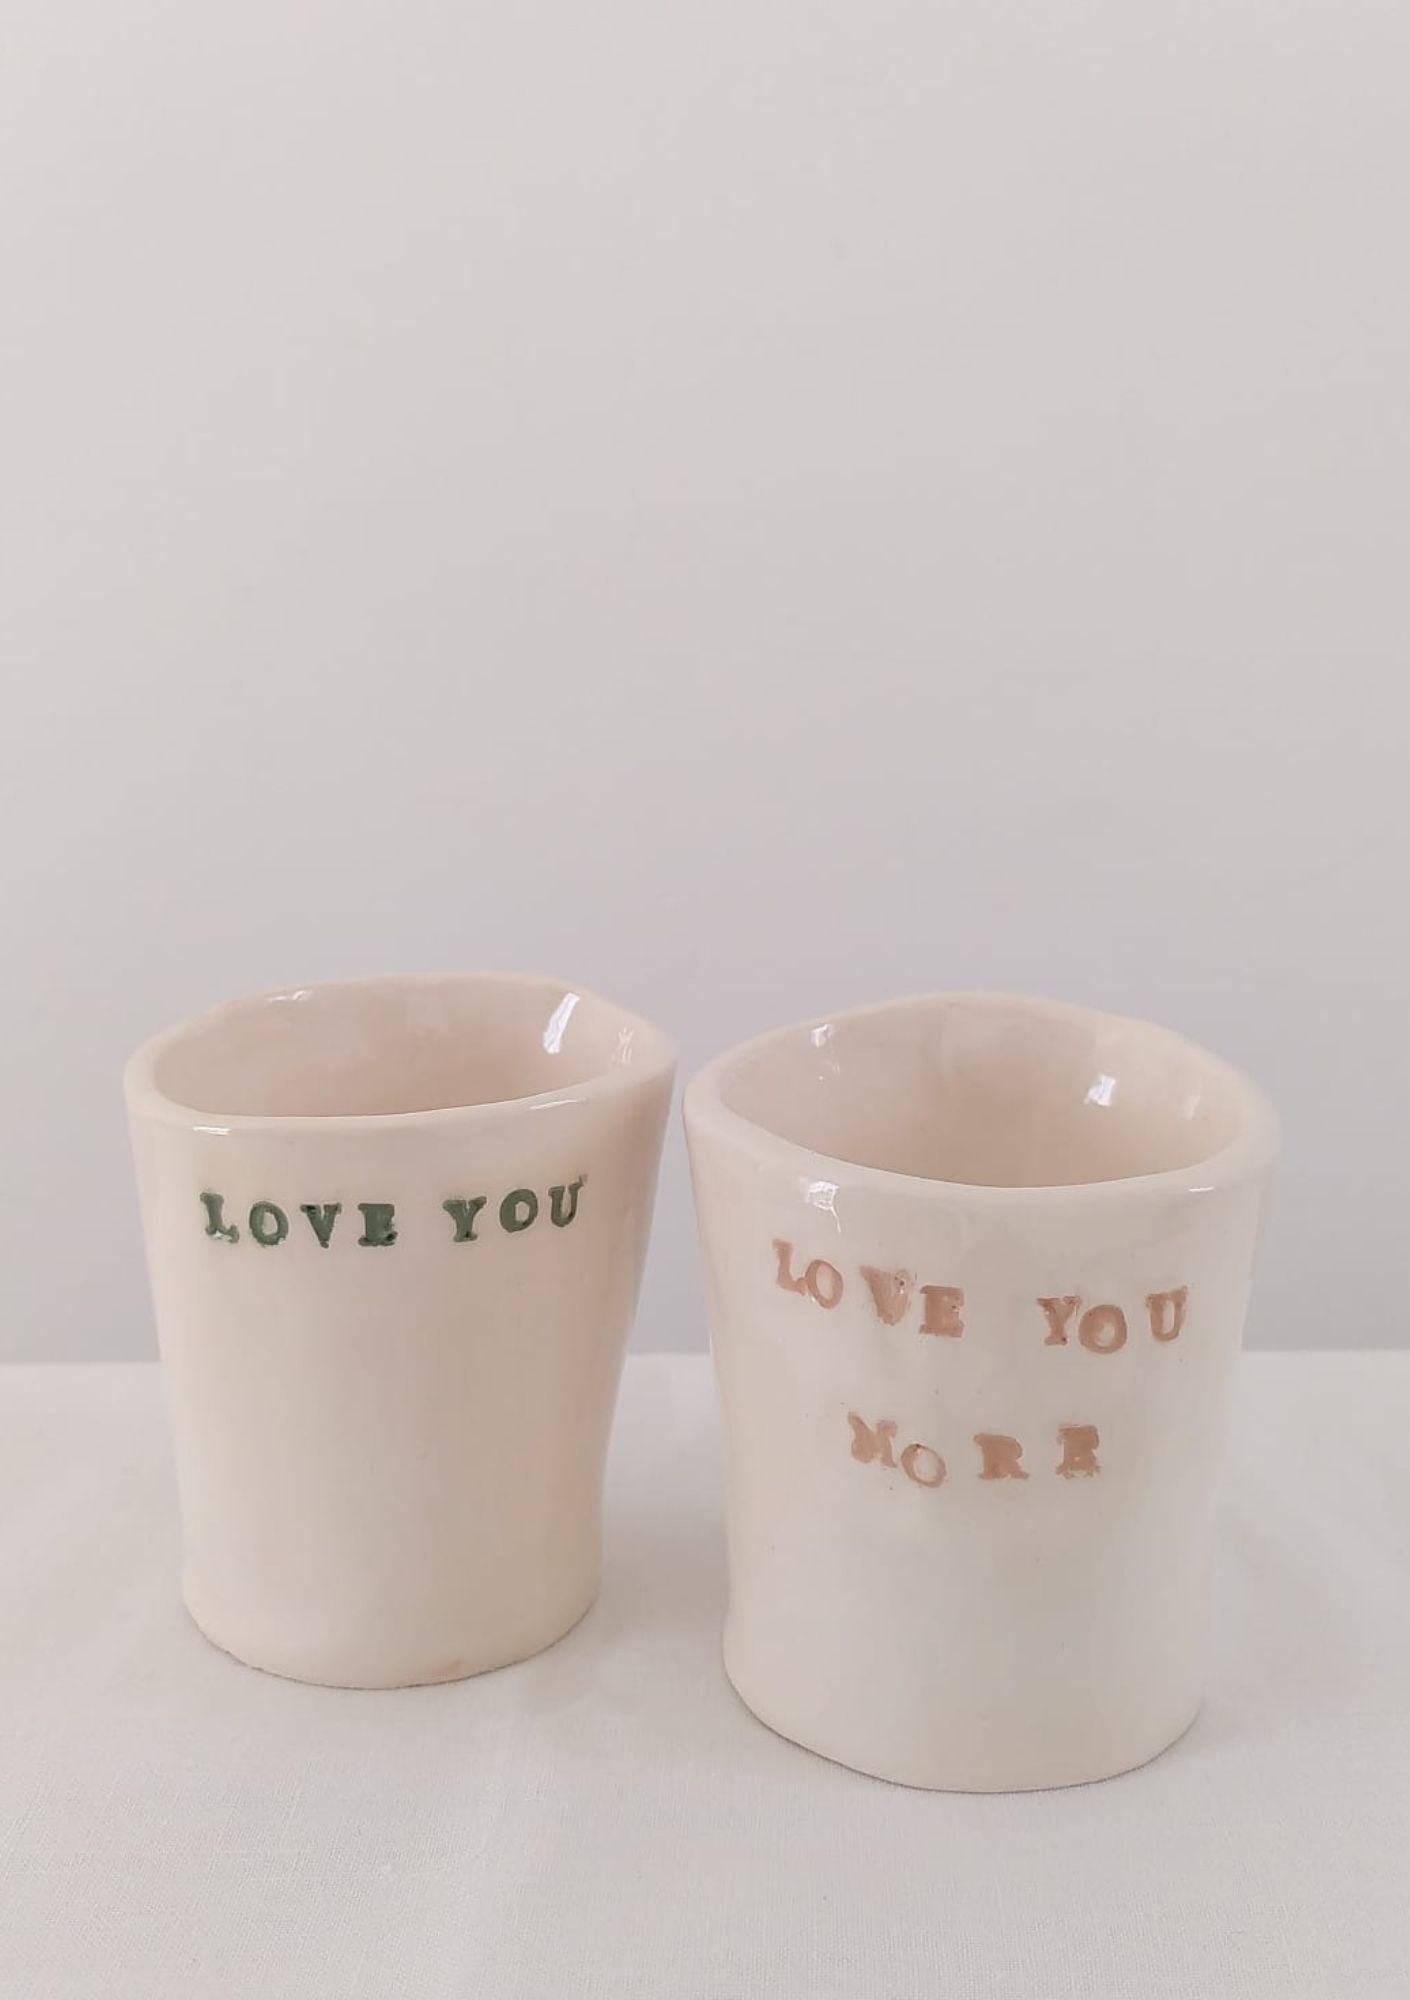 Duo Tasses céramique "Love you" Beige